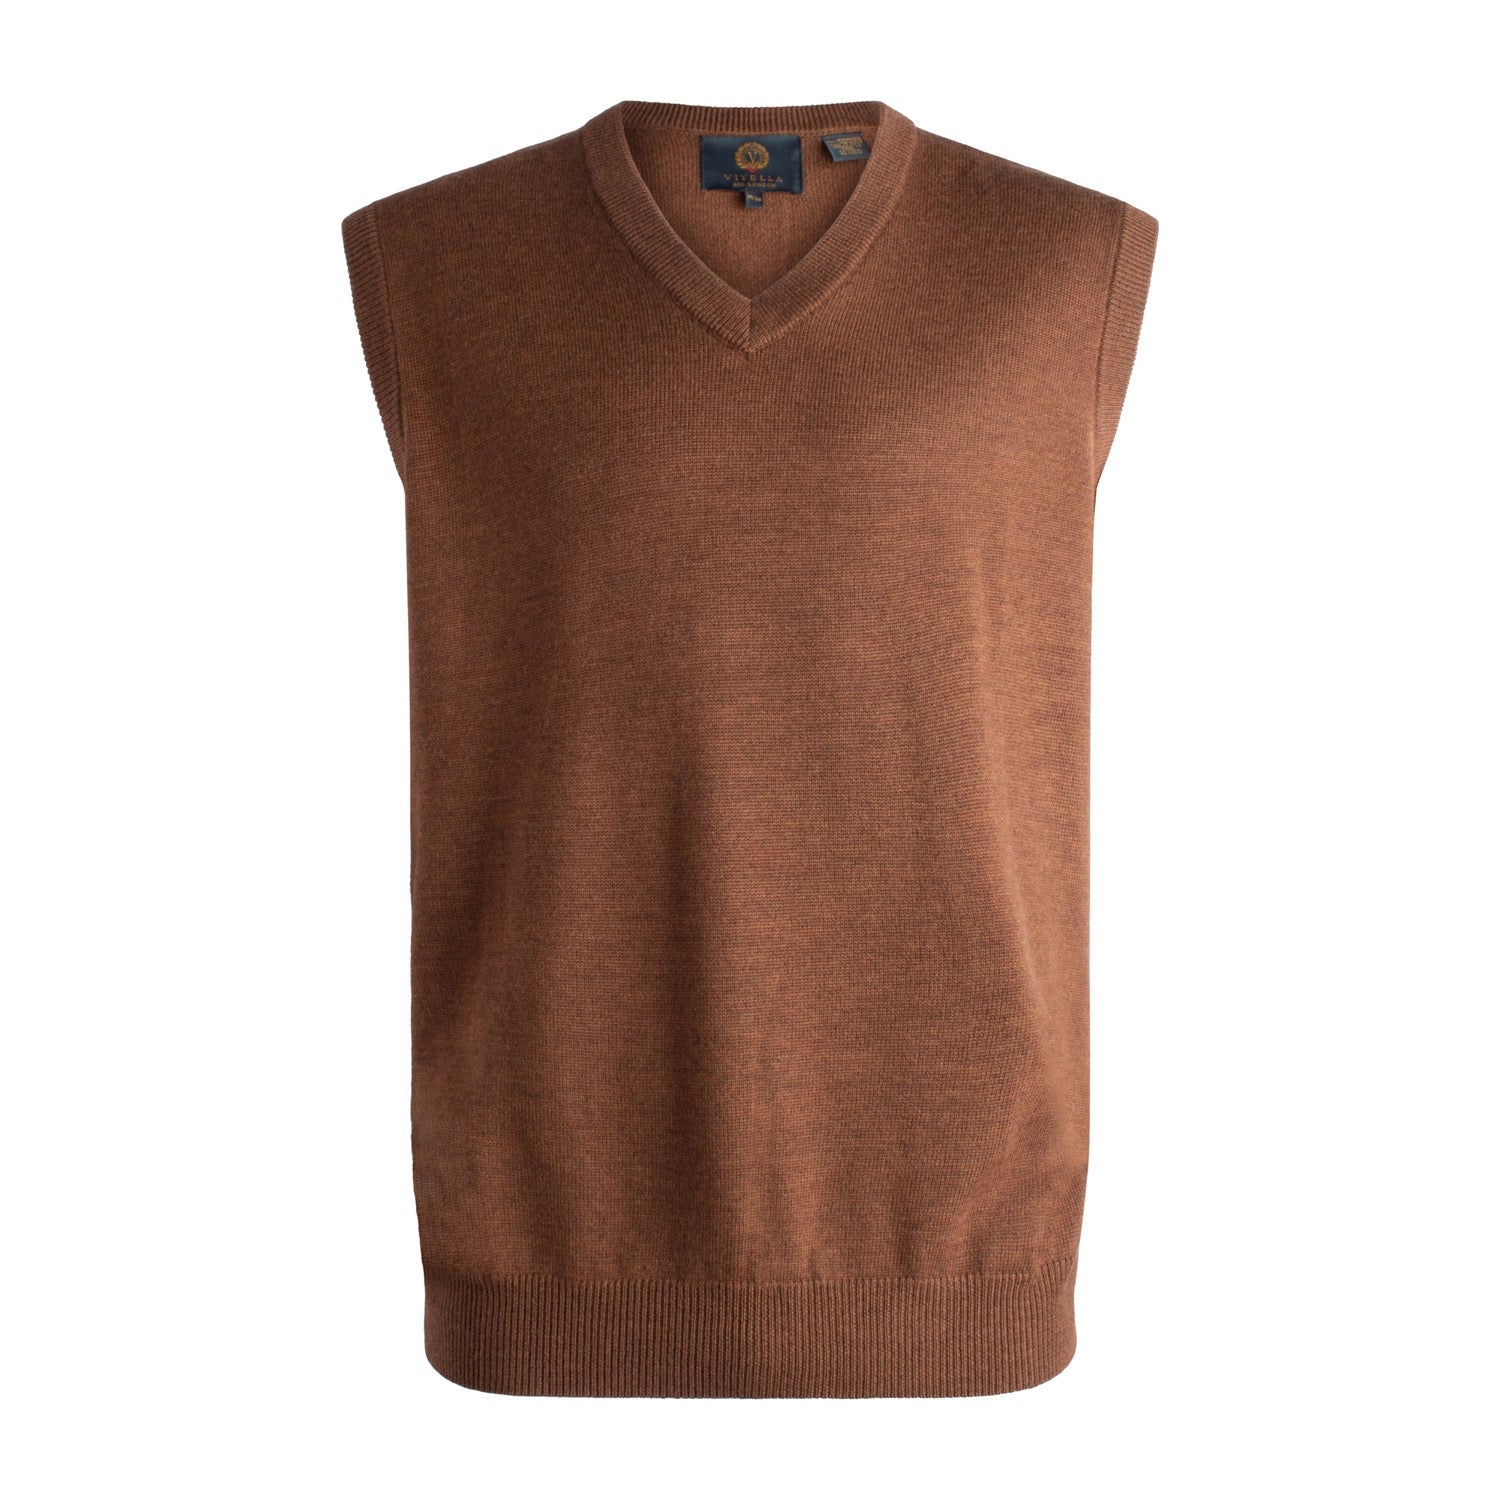 Extra Fine 'Zegna Baruffa' Merino Wool V-Neck Sleeveless Sweater Vest in Brown Melange by Viyella